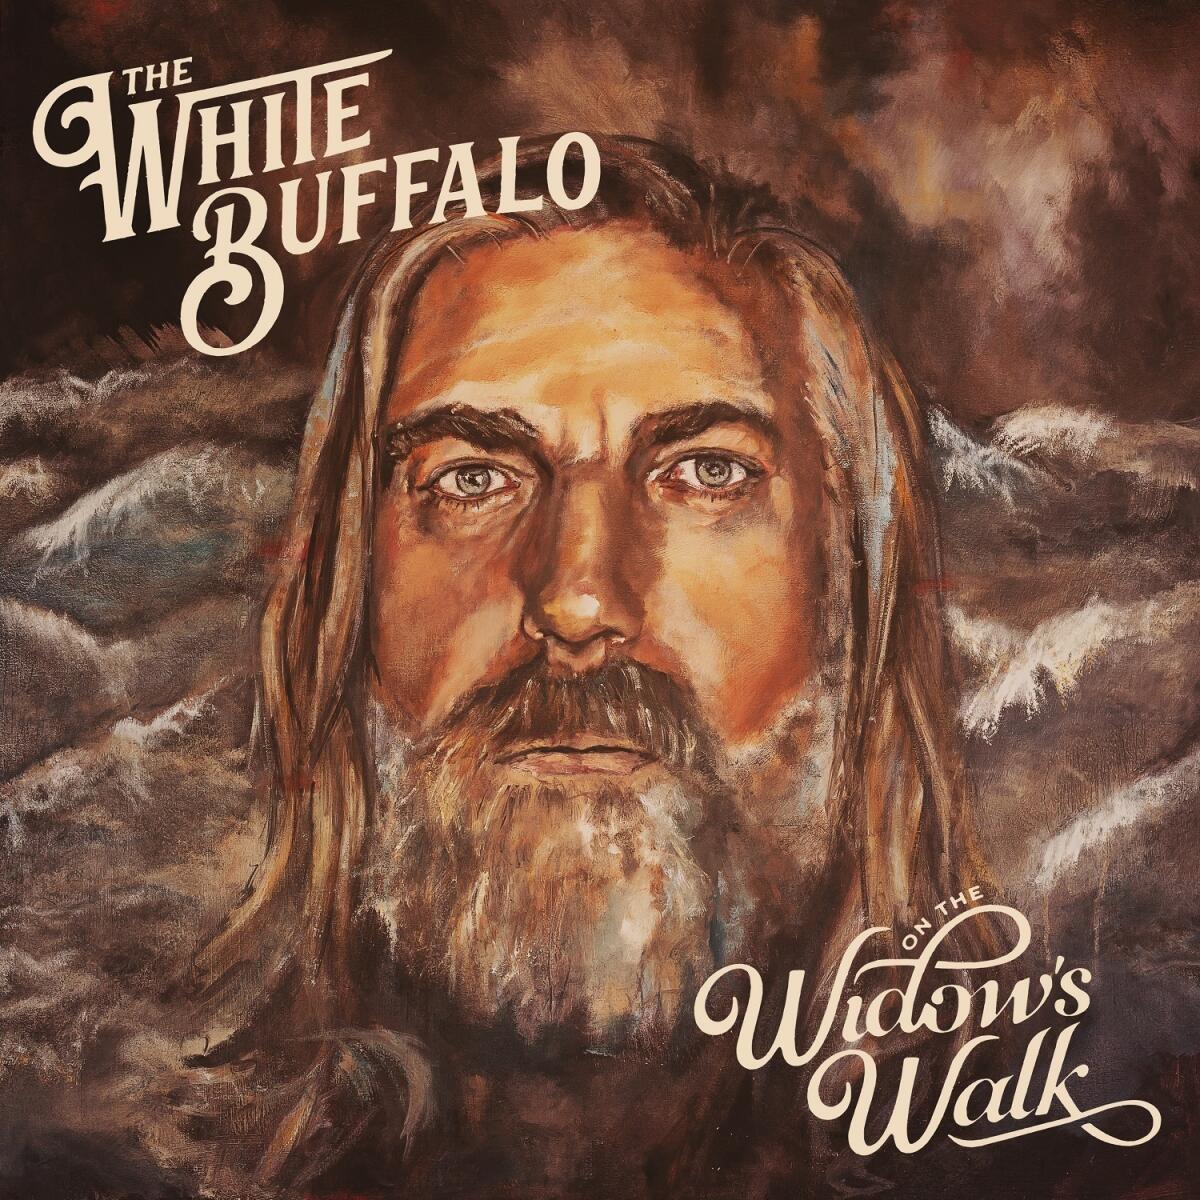 CORRECTION Music Review - The White Buffalo